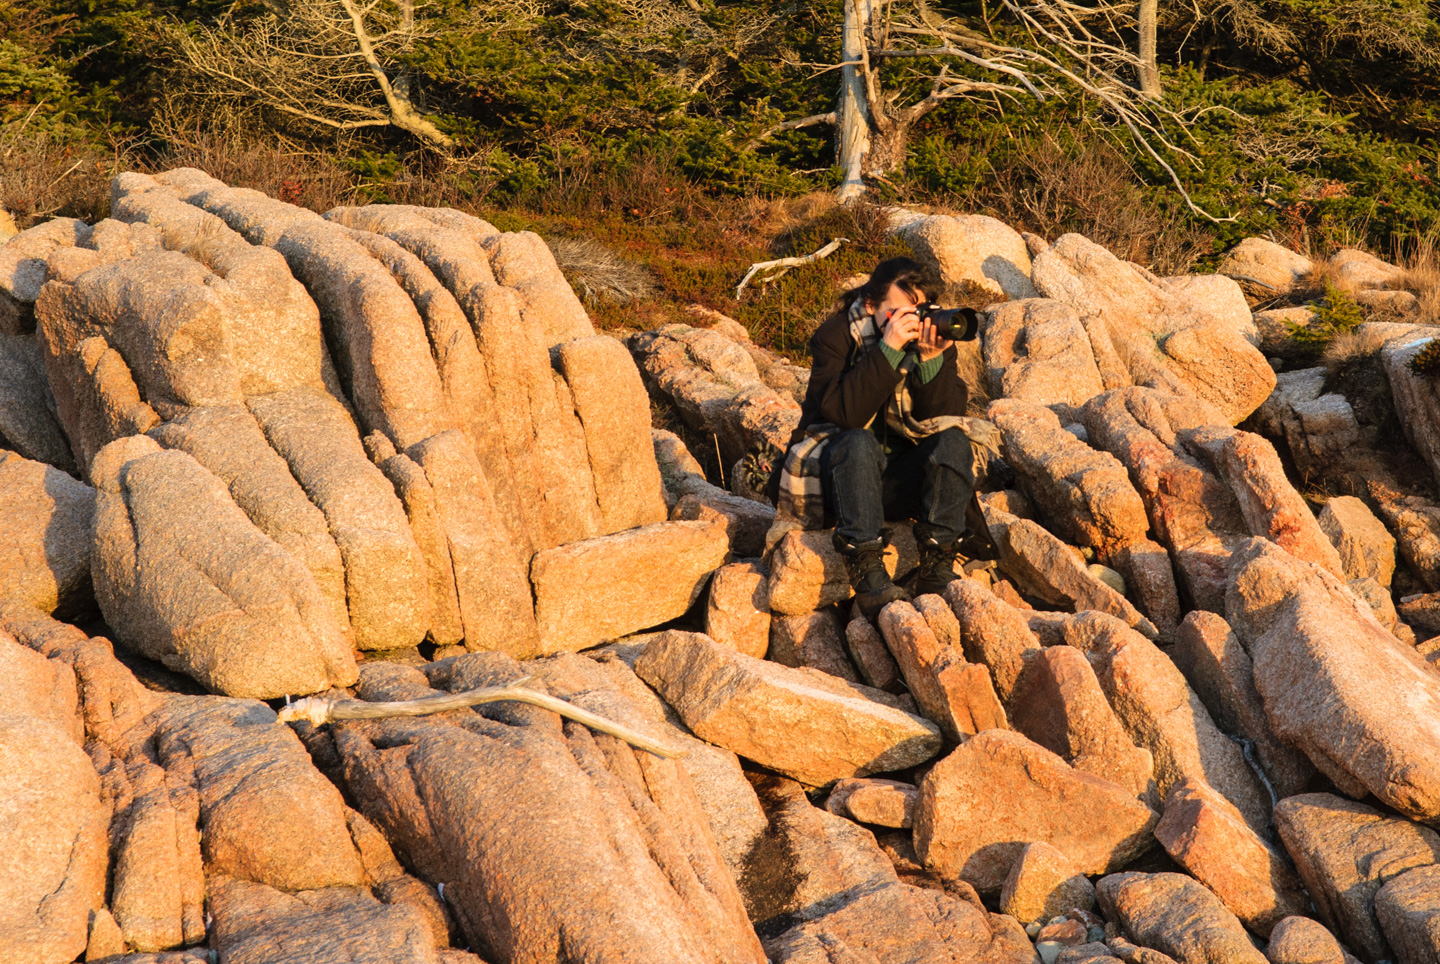 Anne sitting on rocks to take a photo, Barred Island